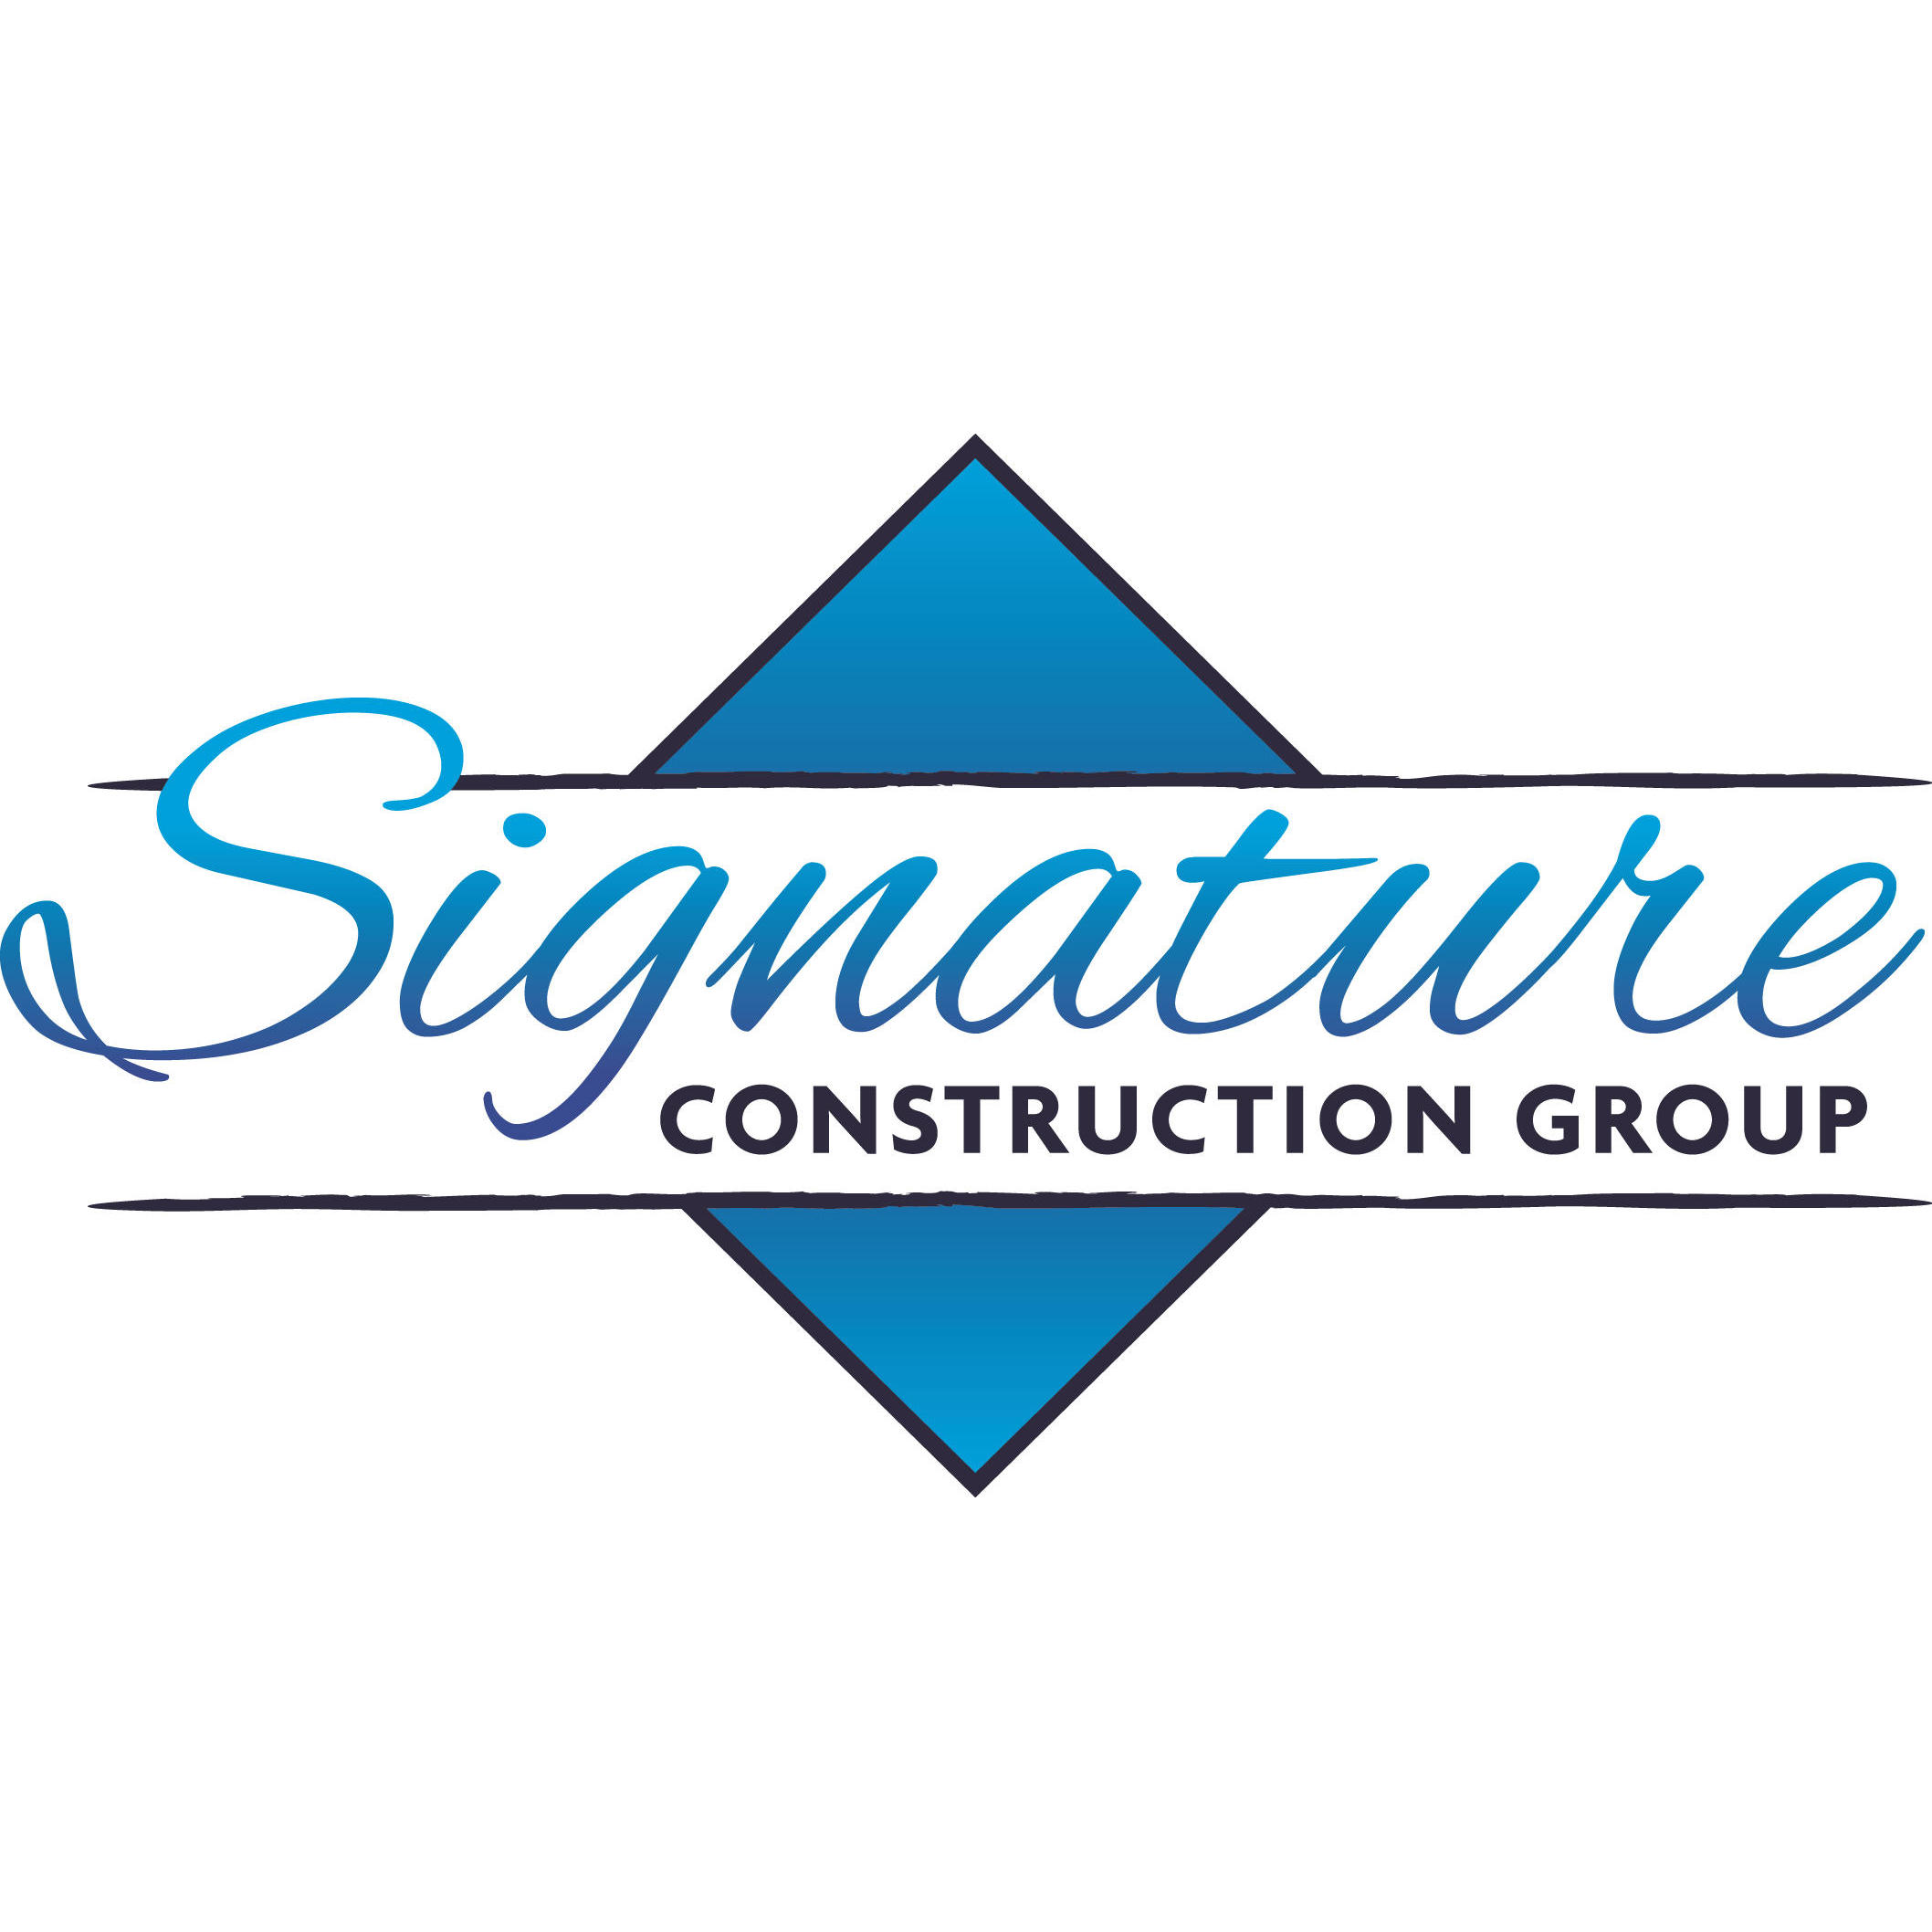 Signature Construction Group